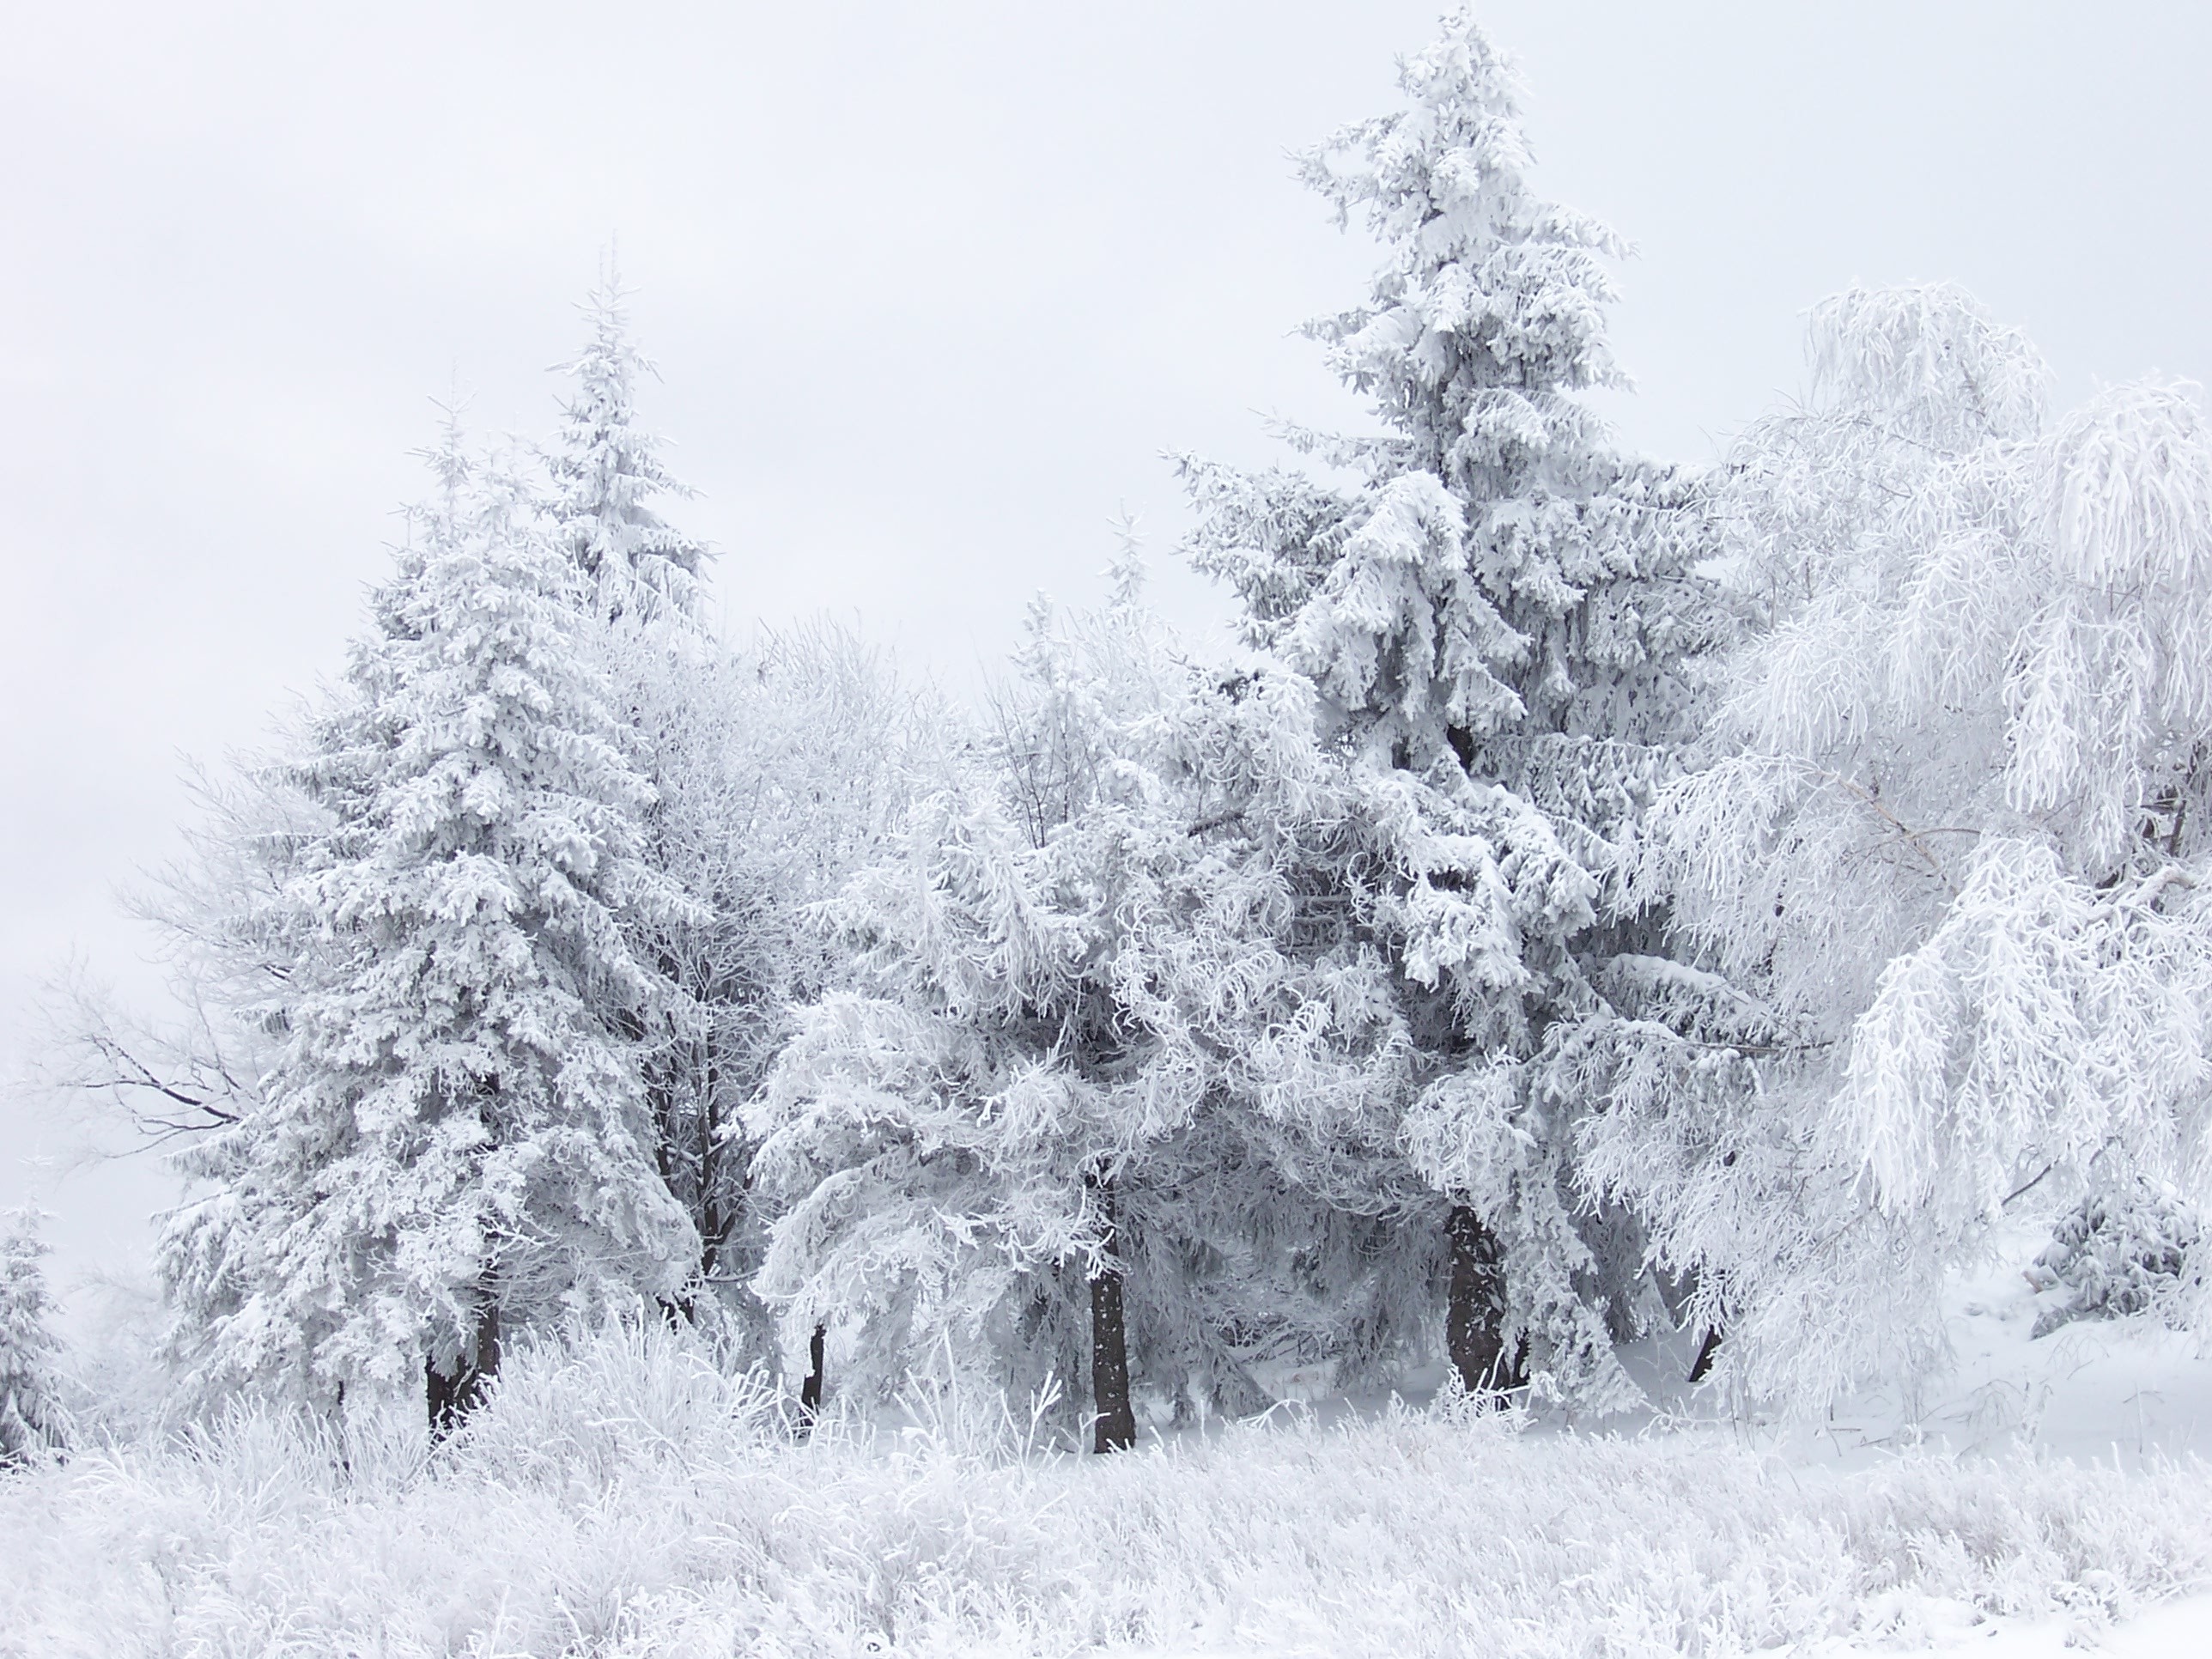 2576x1932 15 best let it snow images on Pinterest | Snow scenes, Winter scenes and  Winter snow